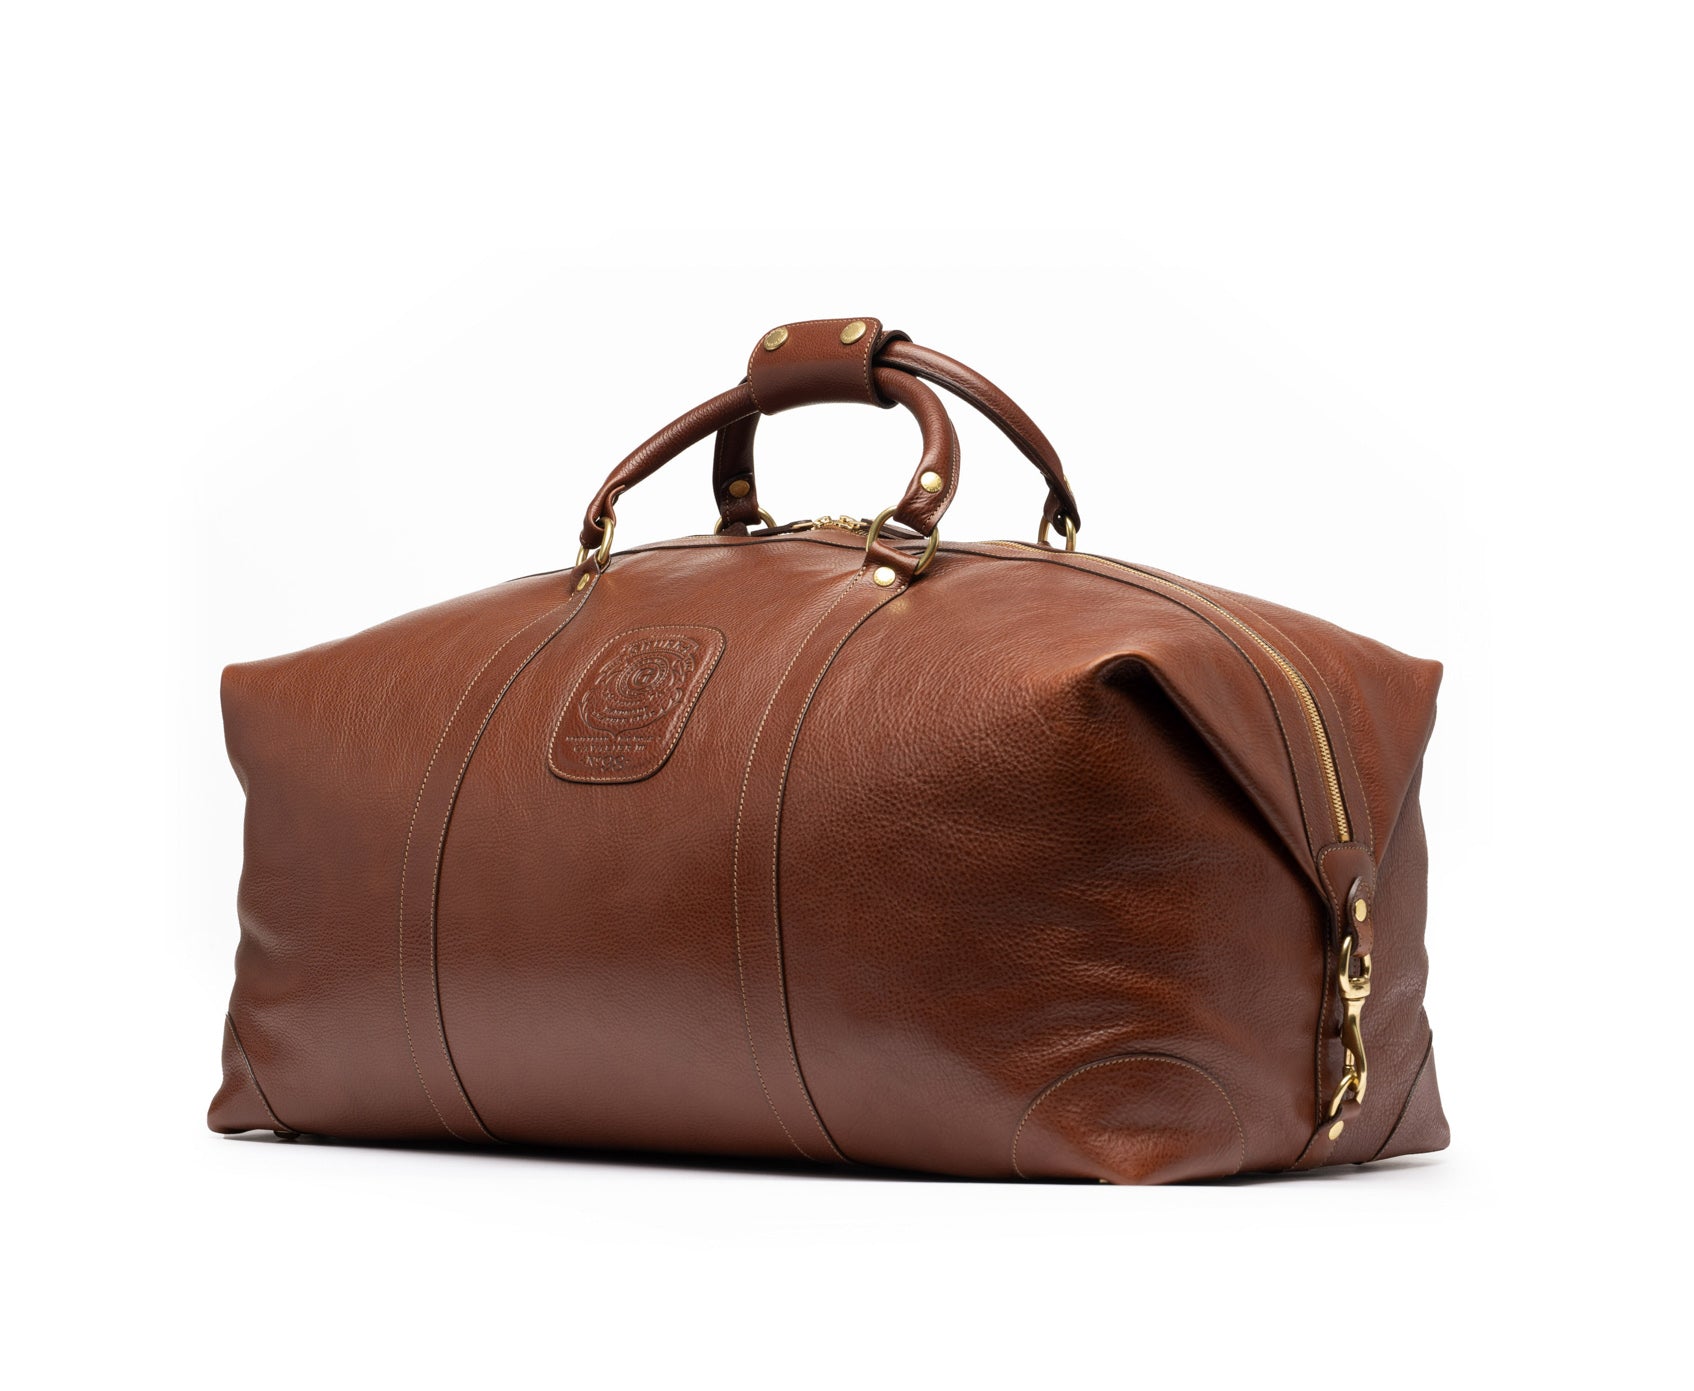 Goldman-II Leather Duffle Bag, Leather Travel Bag